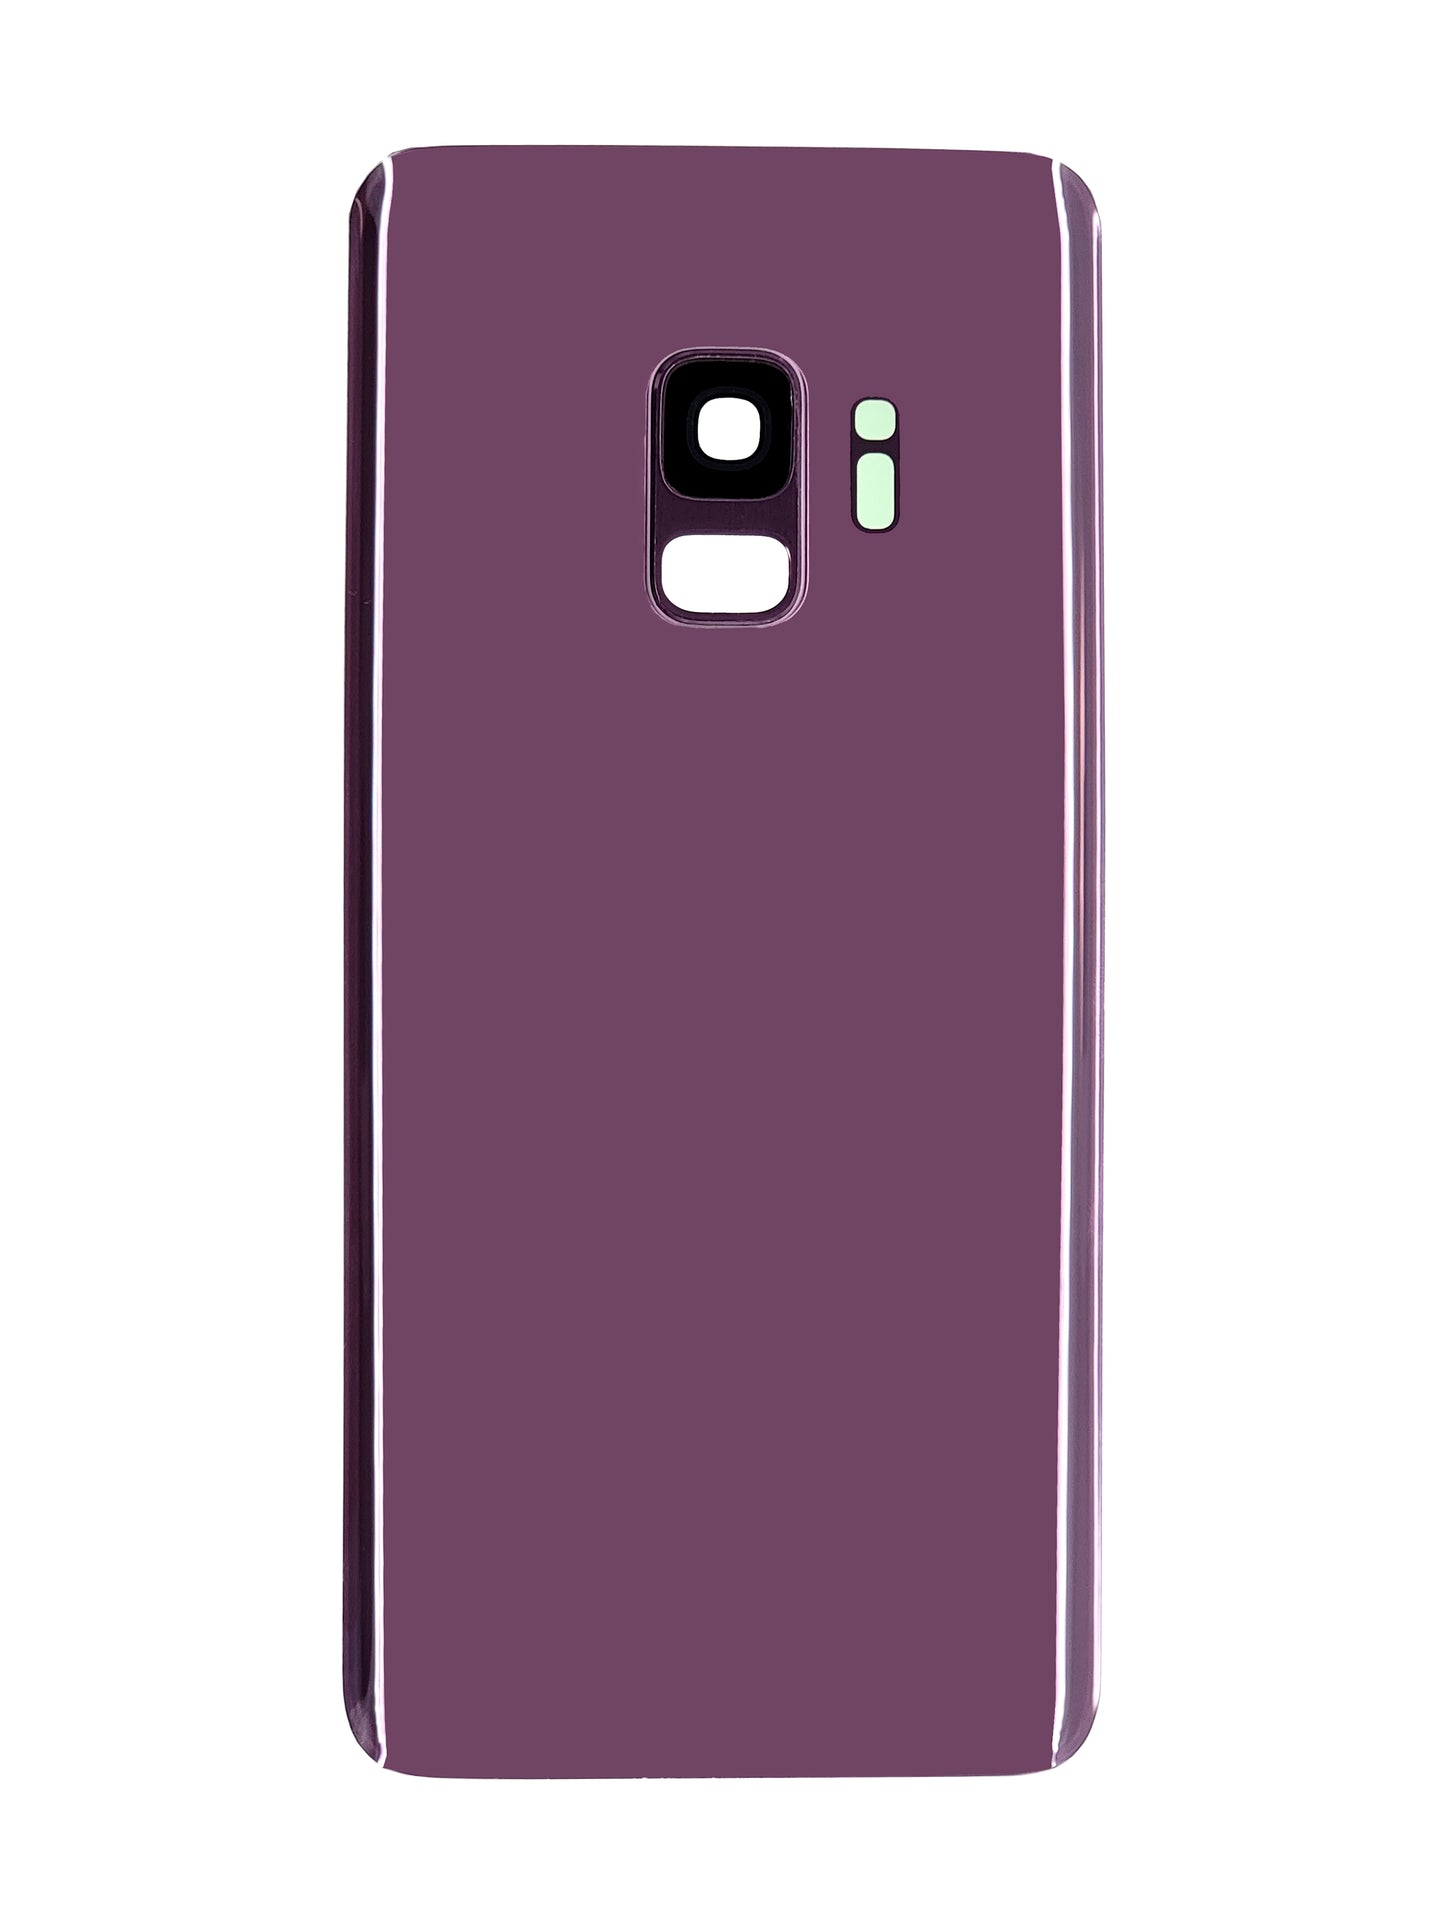 SGS S9 Back Cover (Lilac Purple)